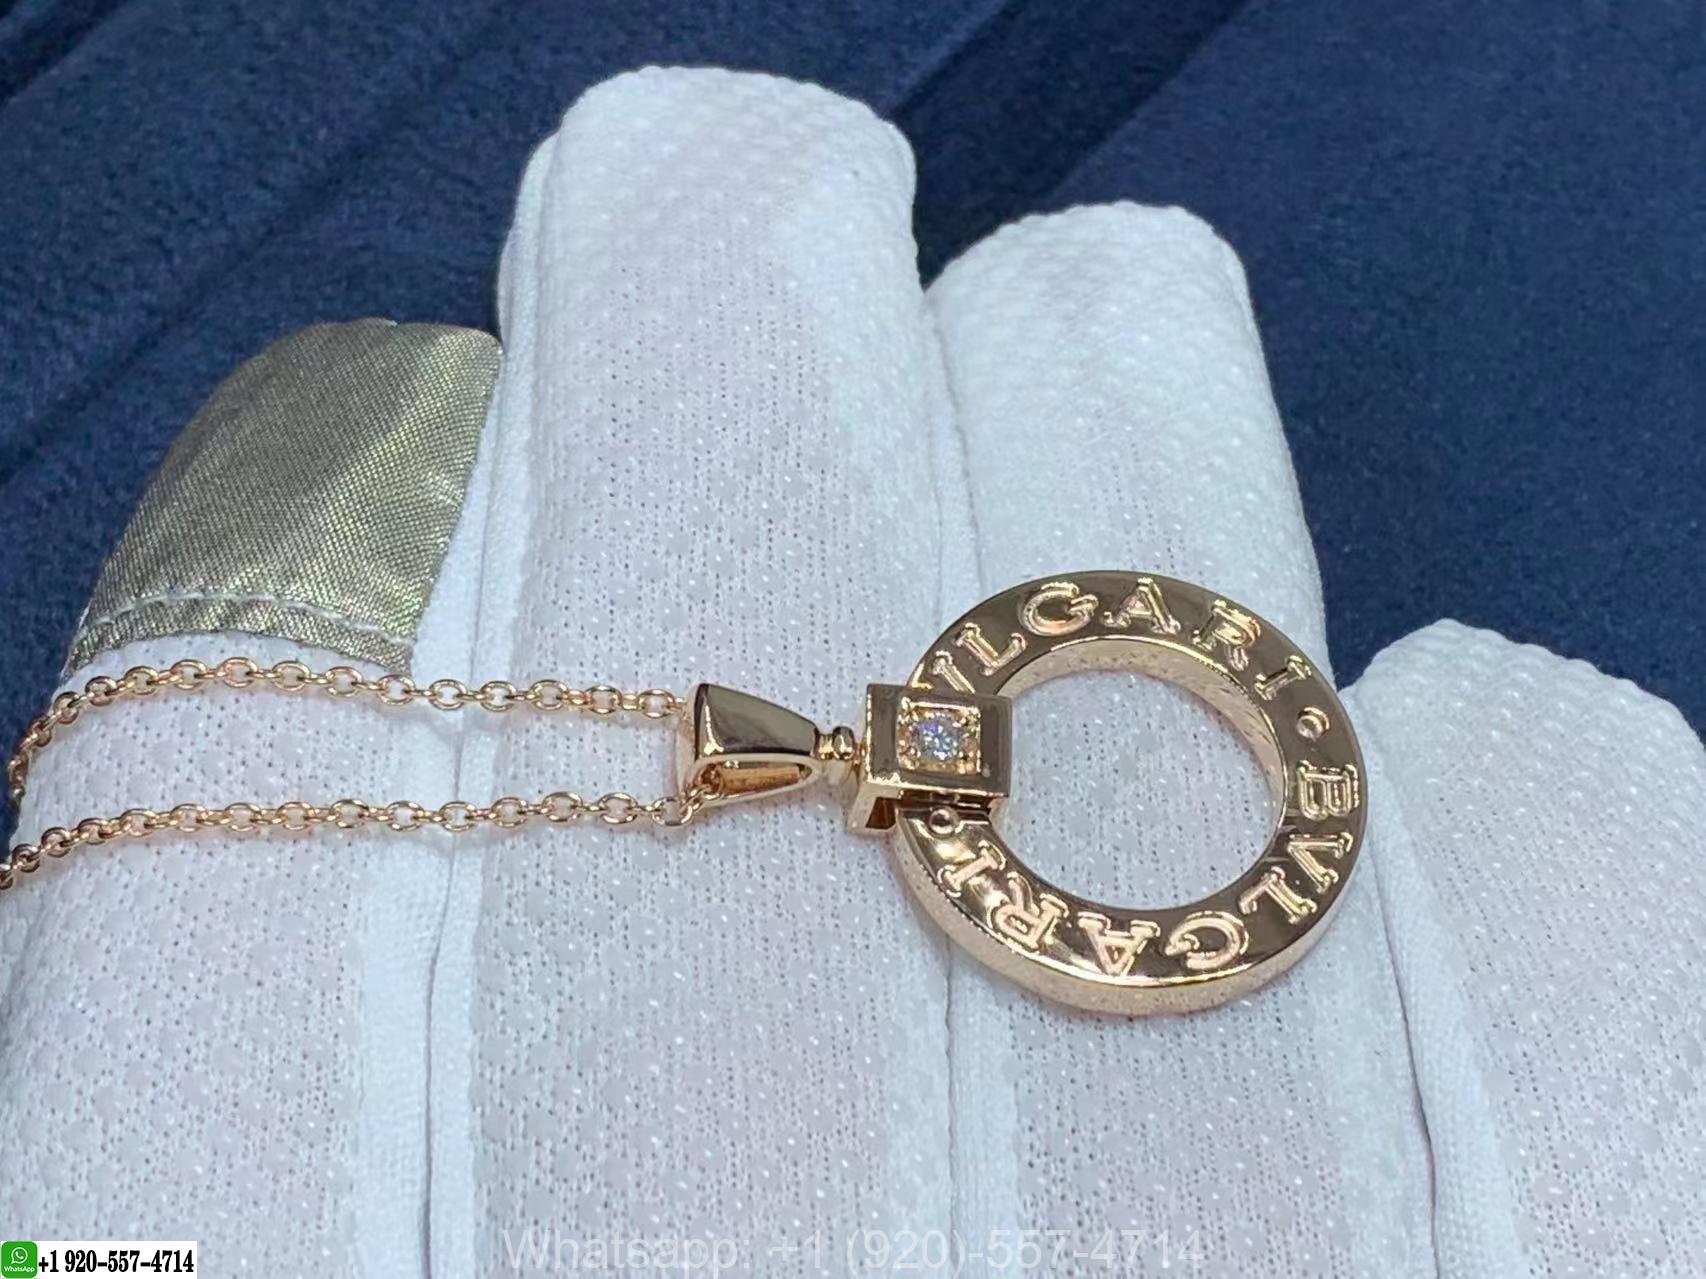 Bvlgari Bvlgari Necklace With 18K Rose Gold Pendant Set With a Diamond 344492